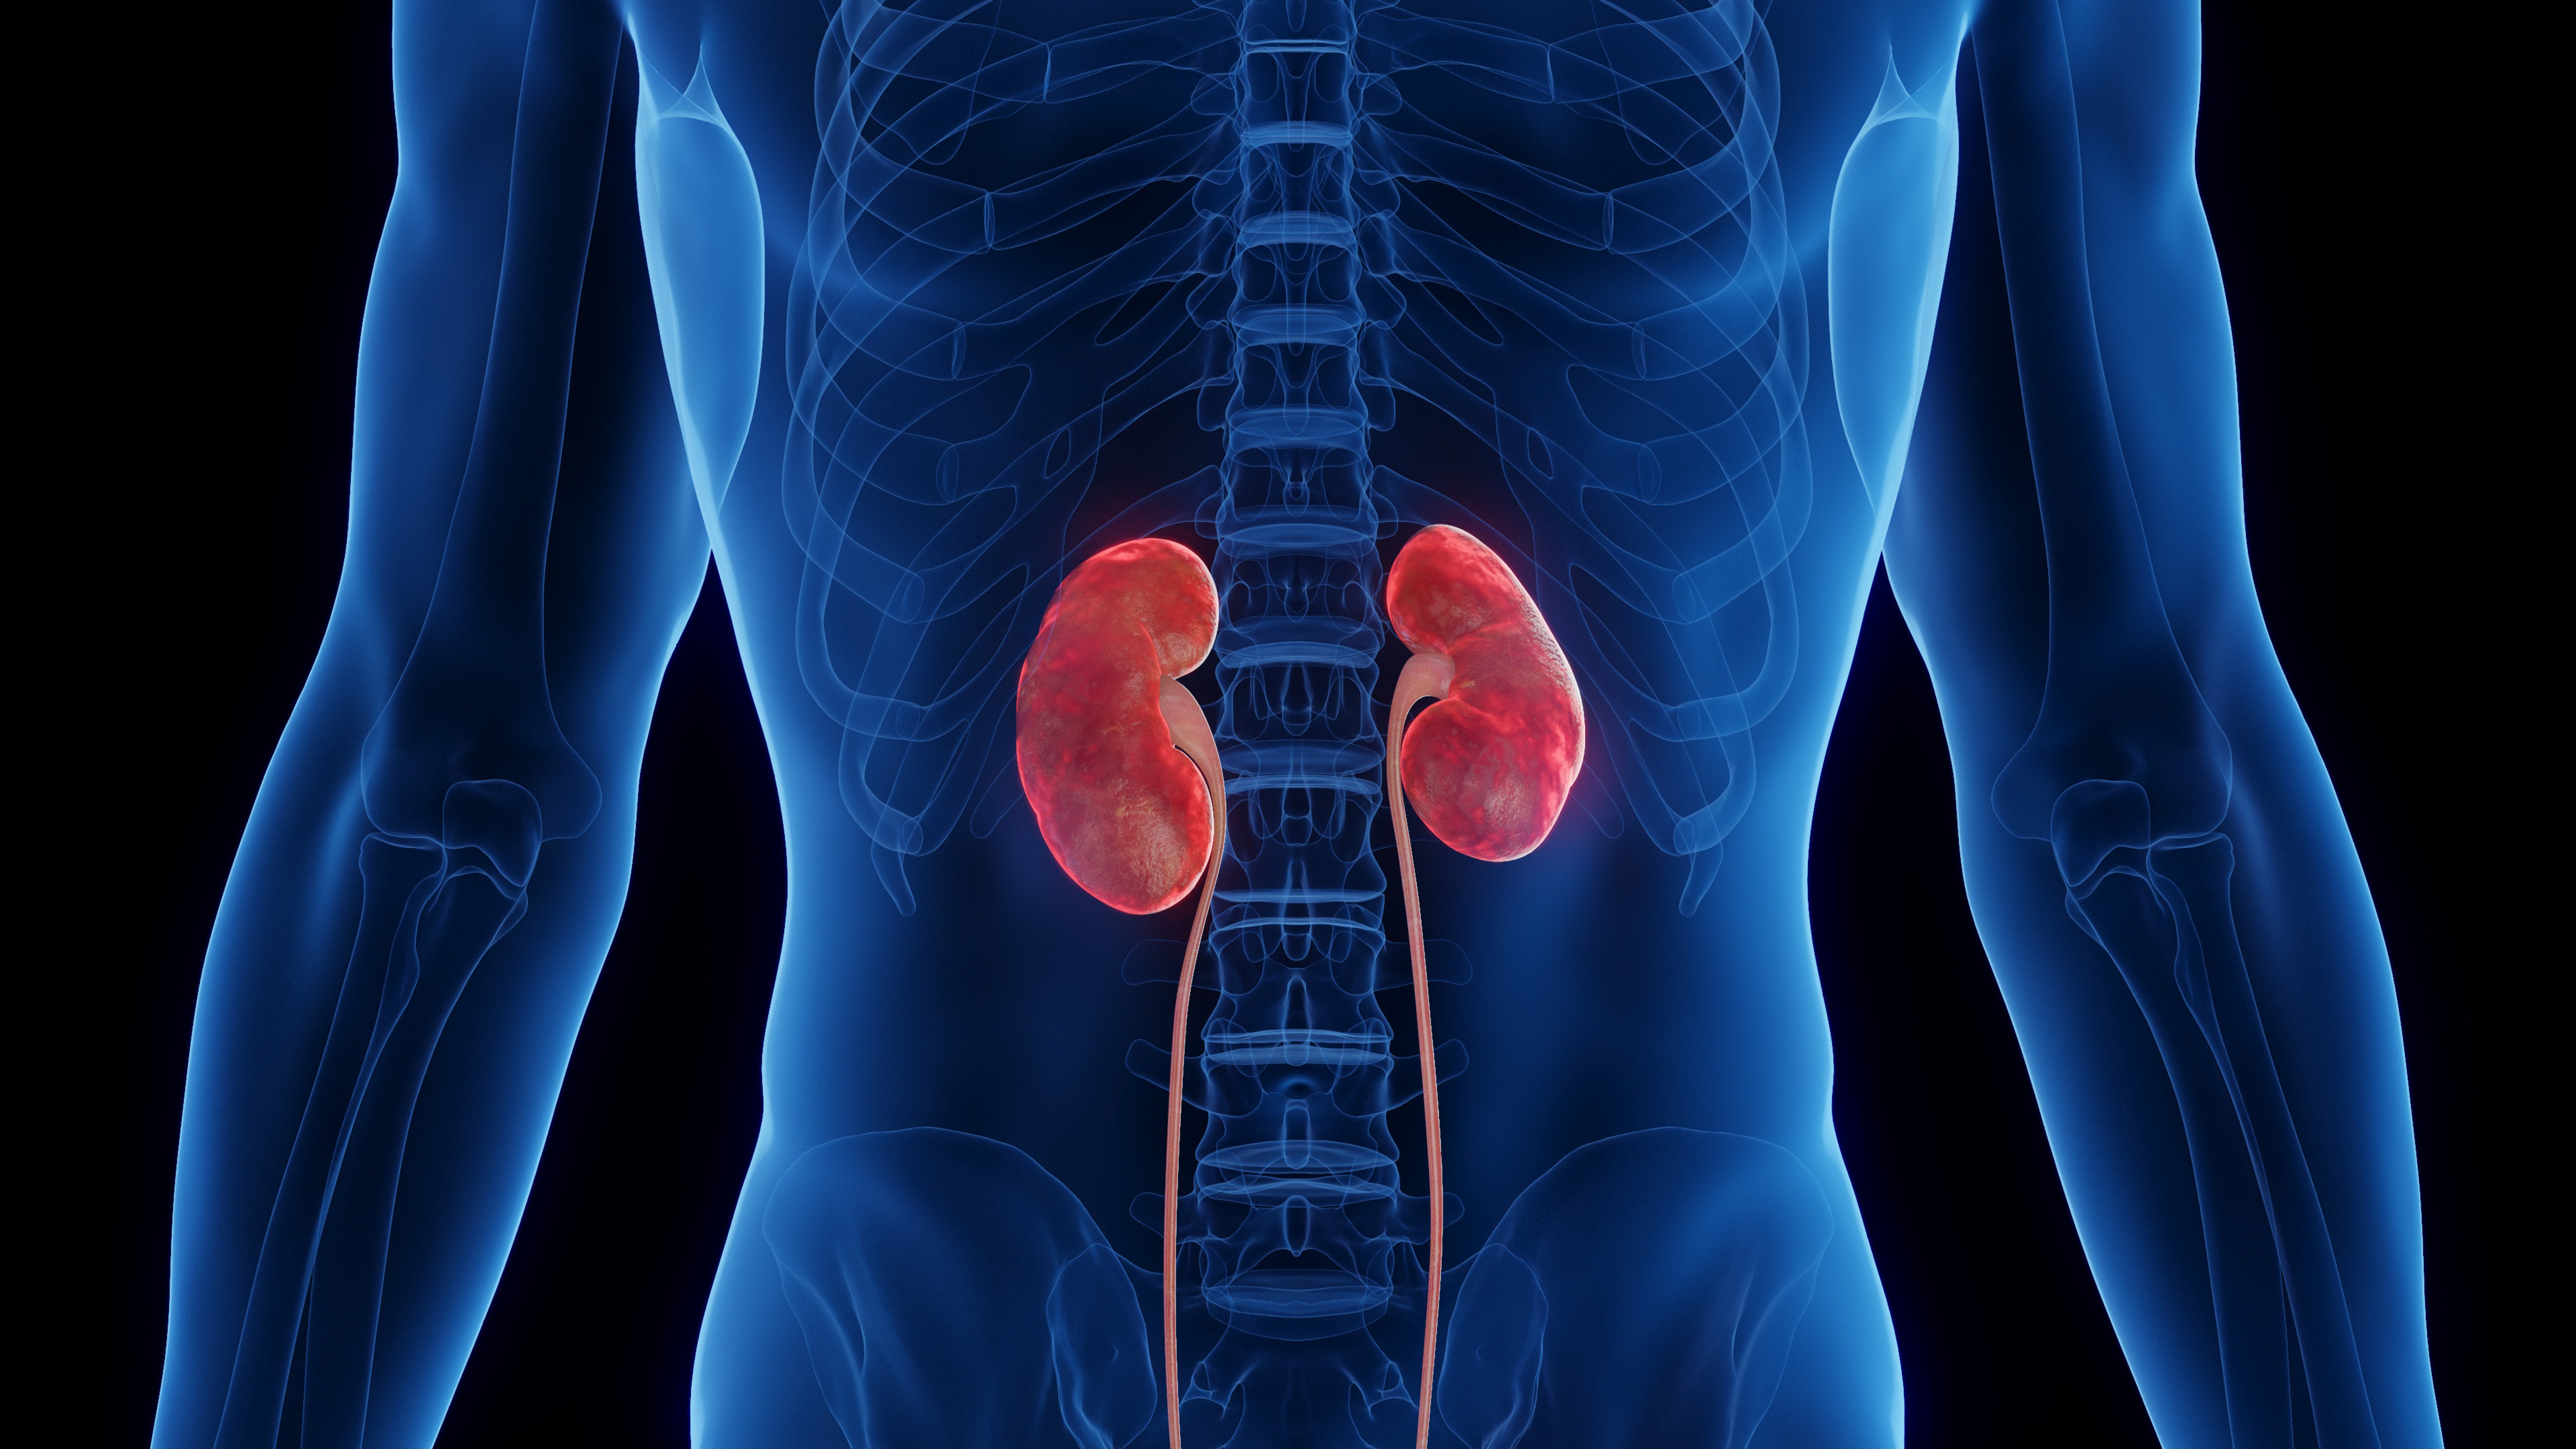 Kidney scan  illustration